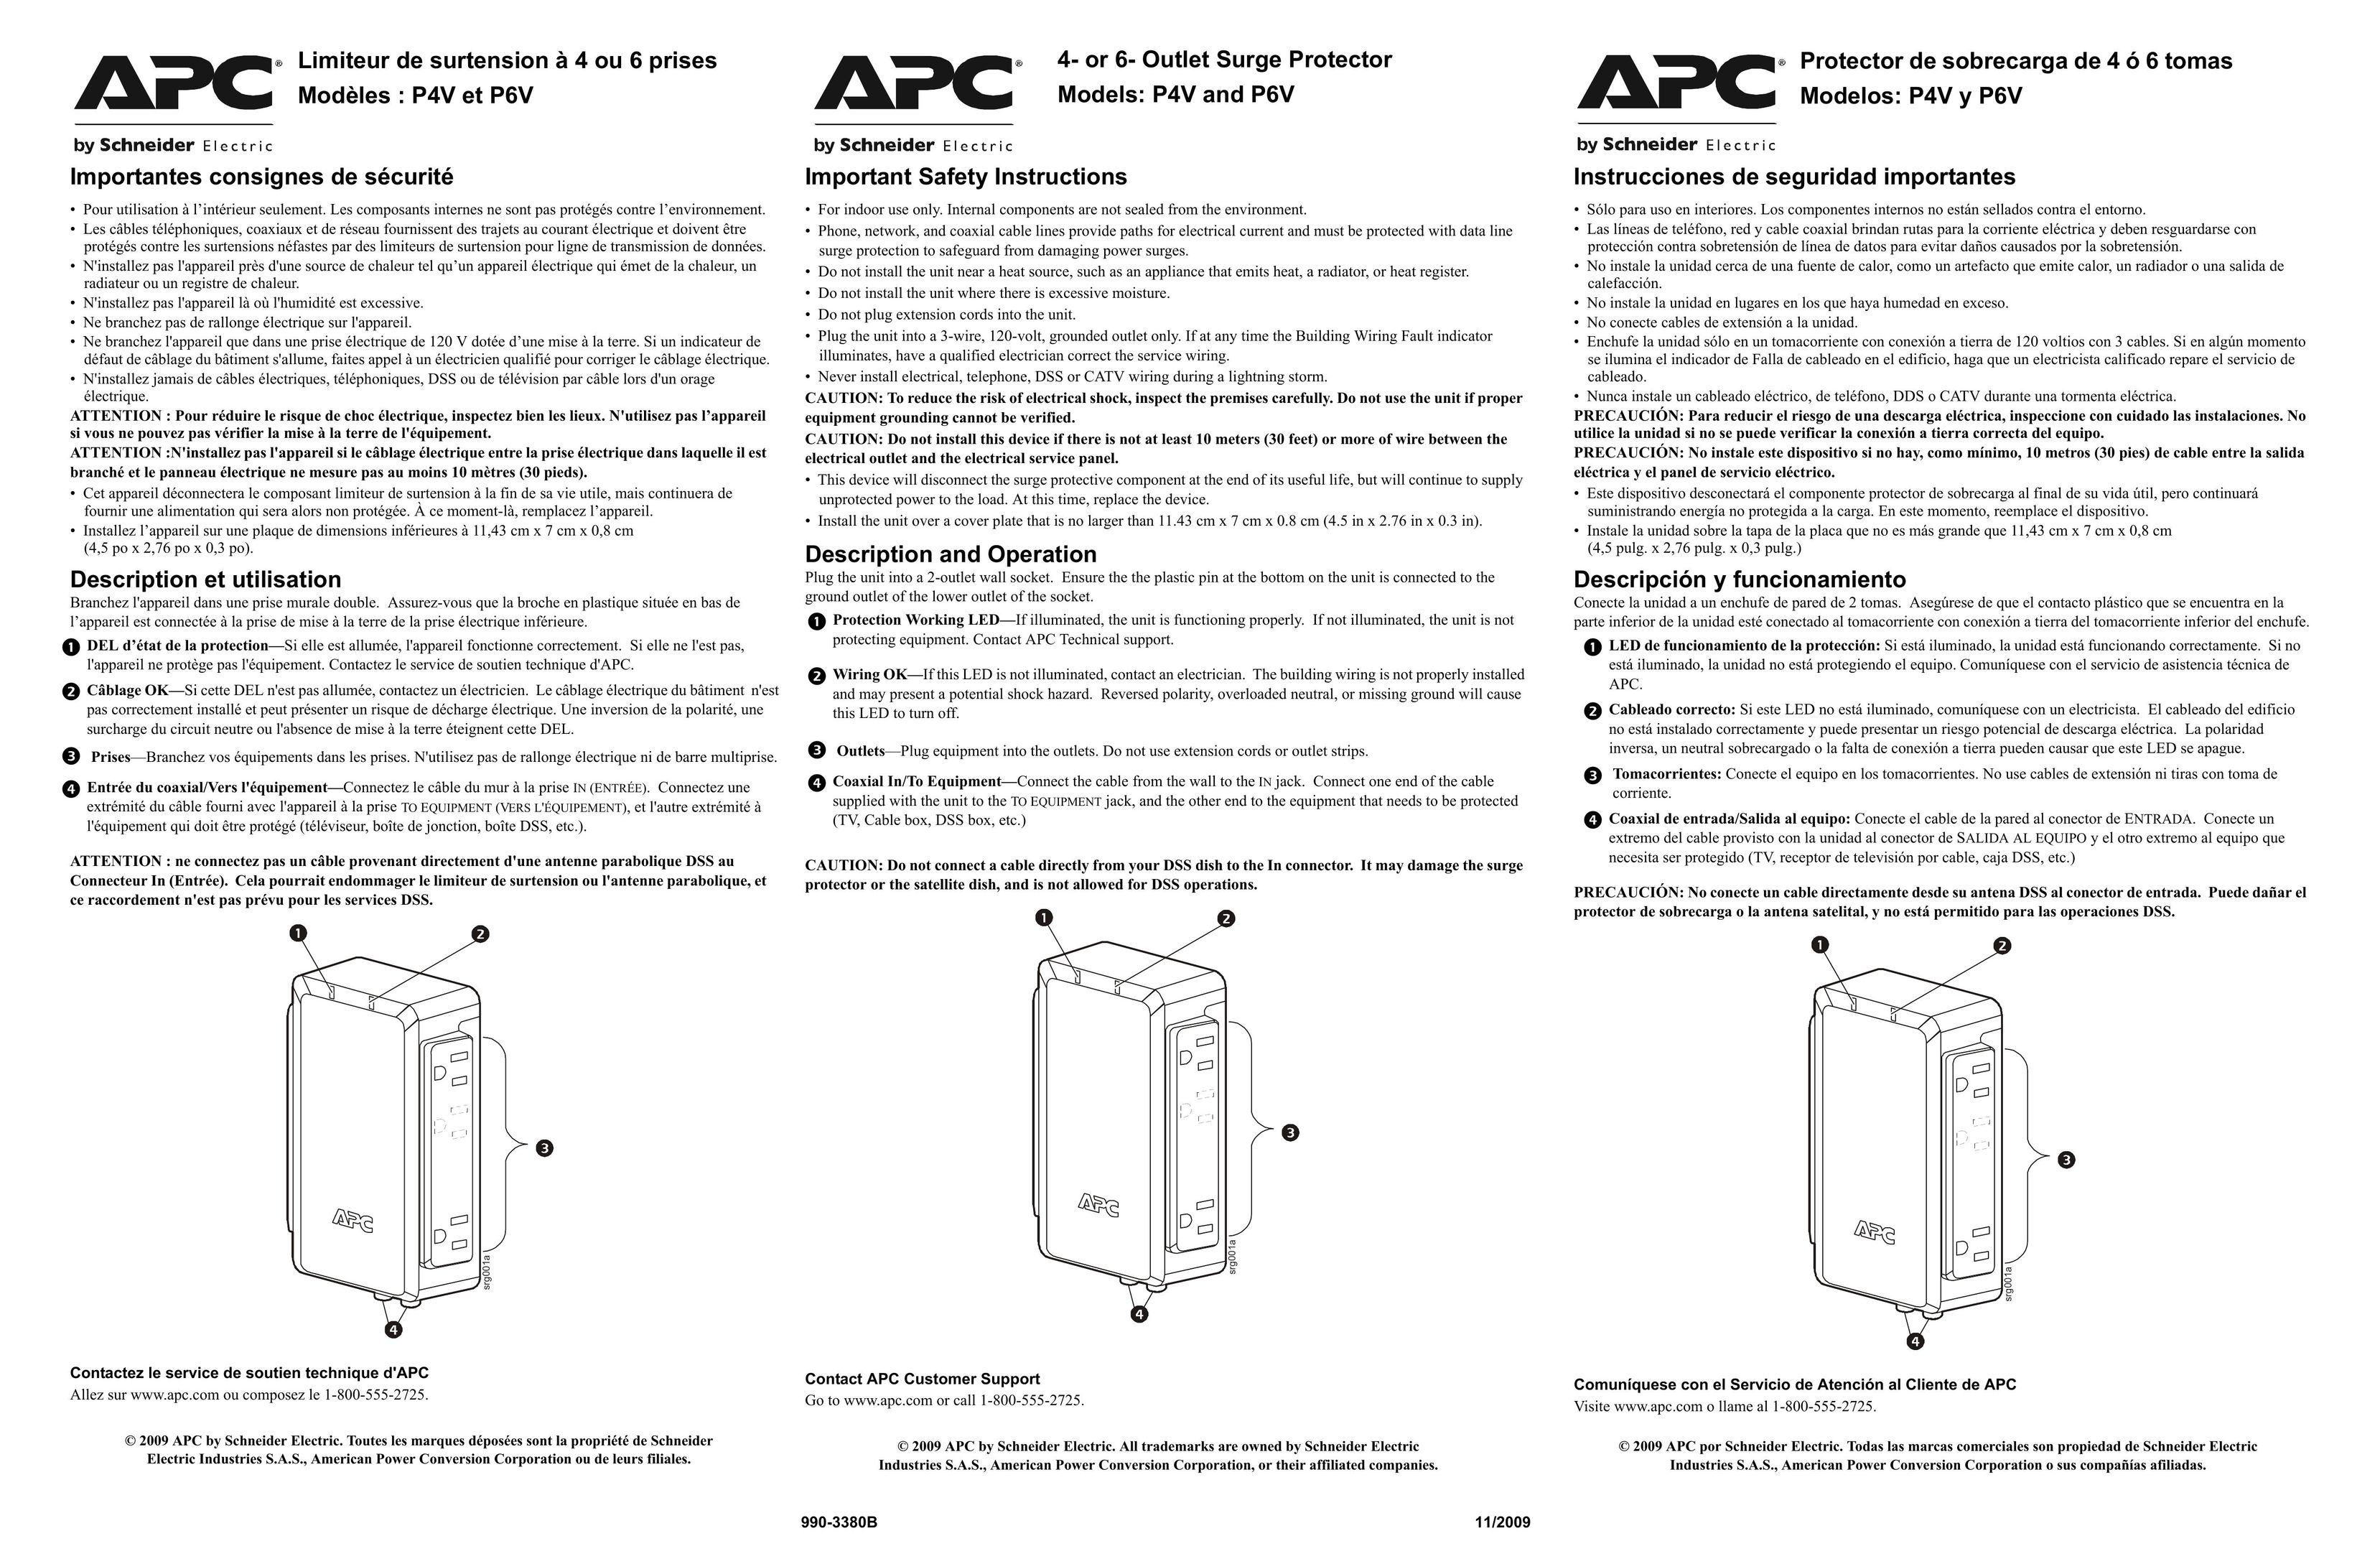 APC 990 3380B 11 2009 Surge Protector User Manual